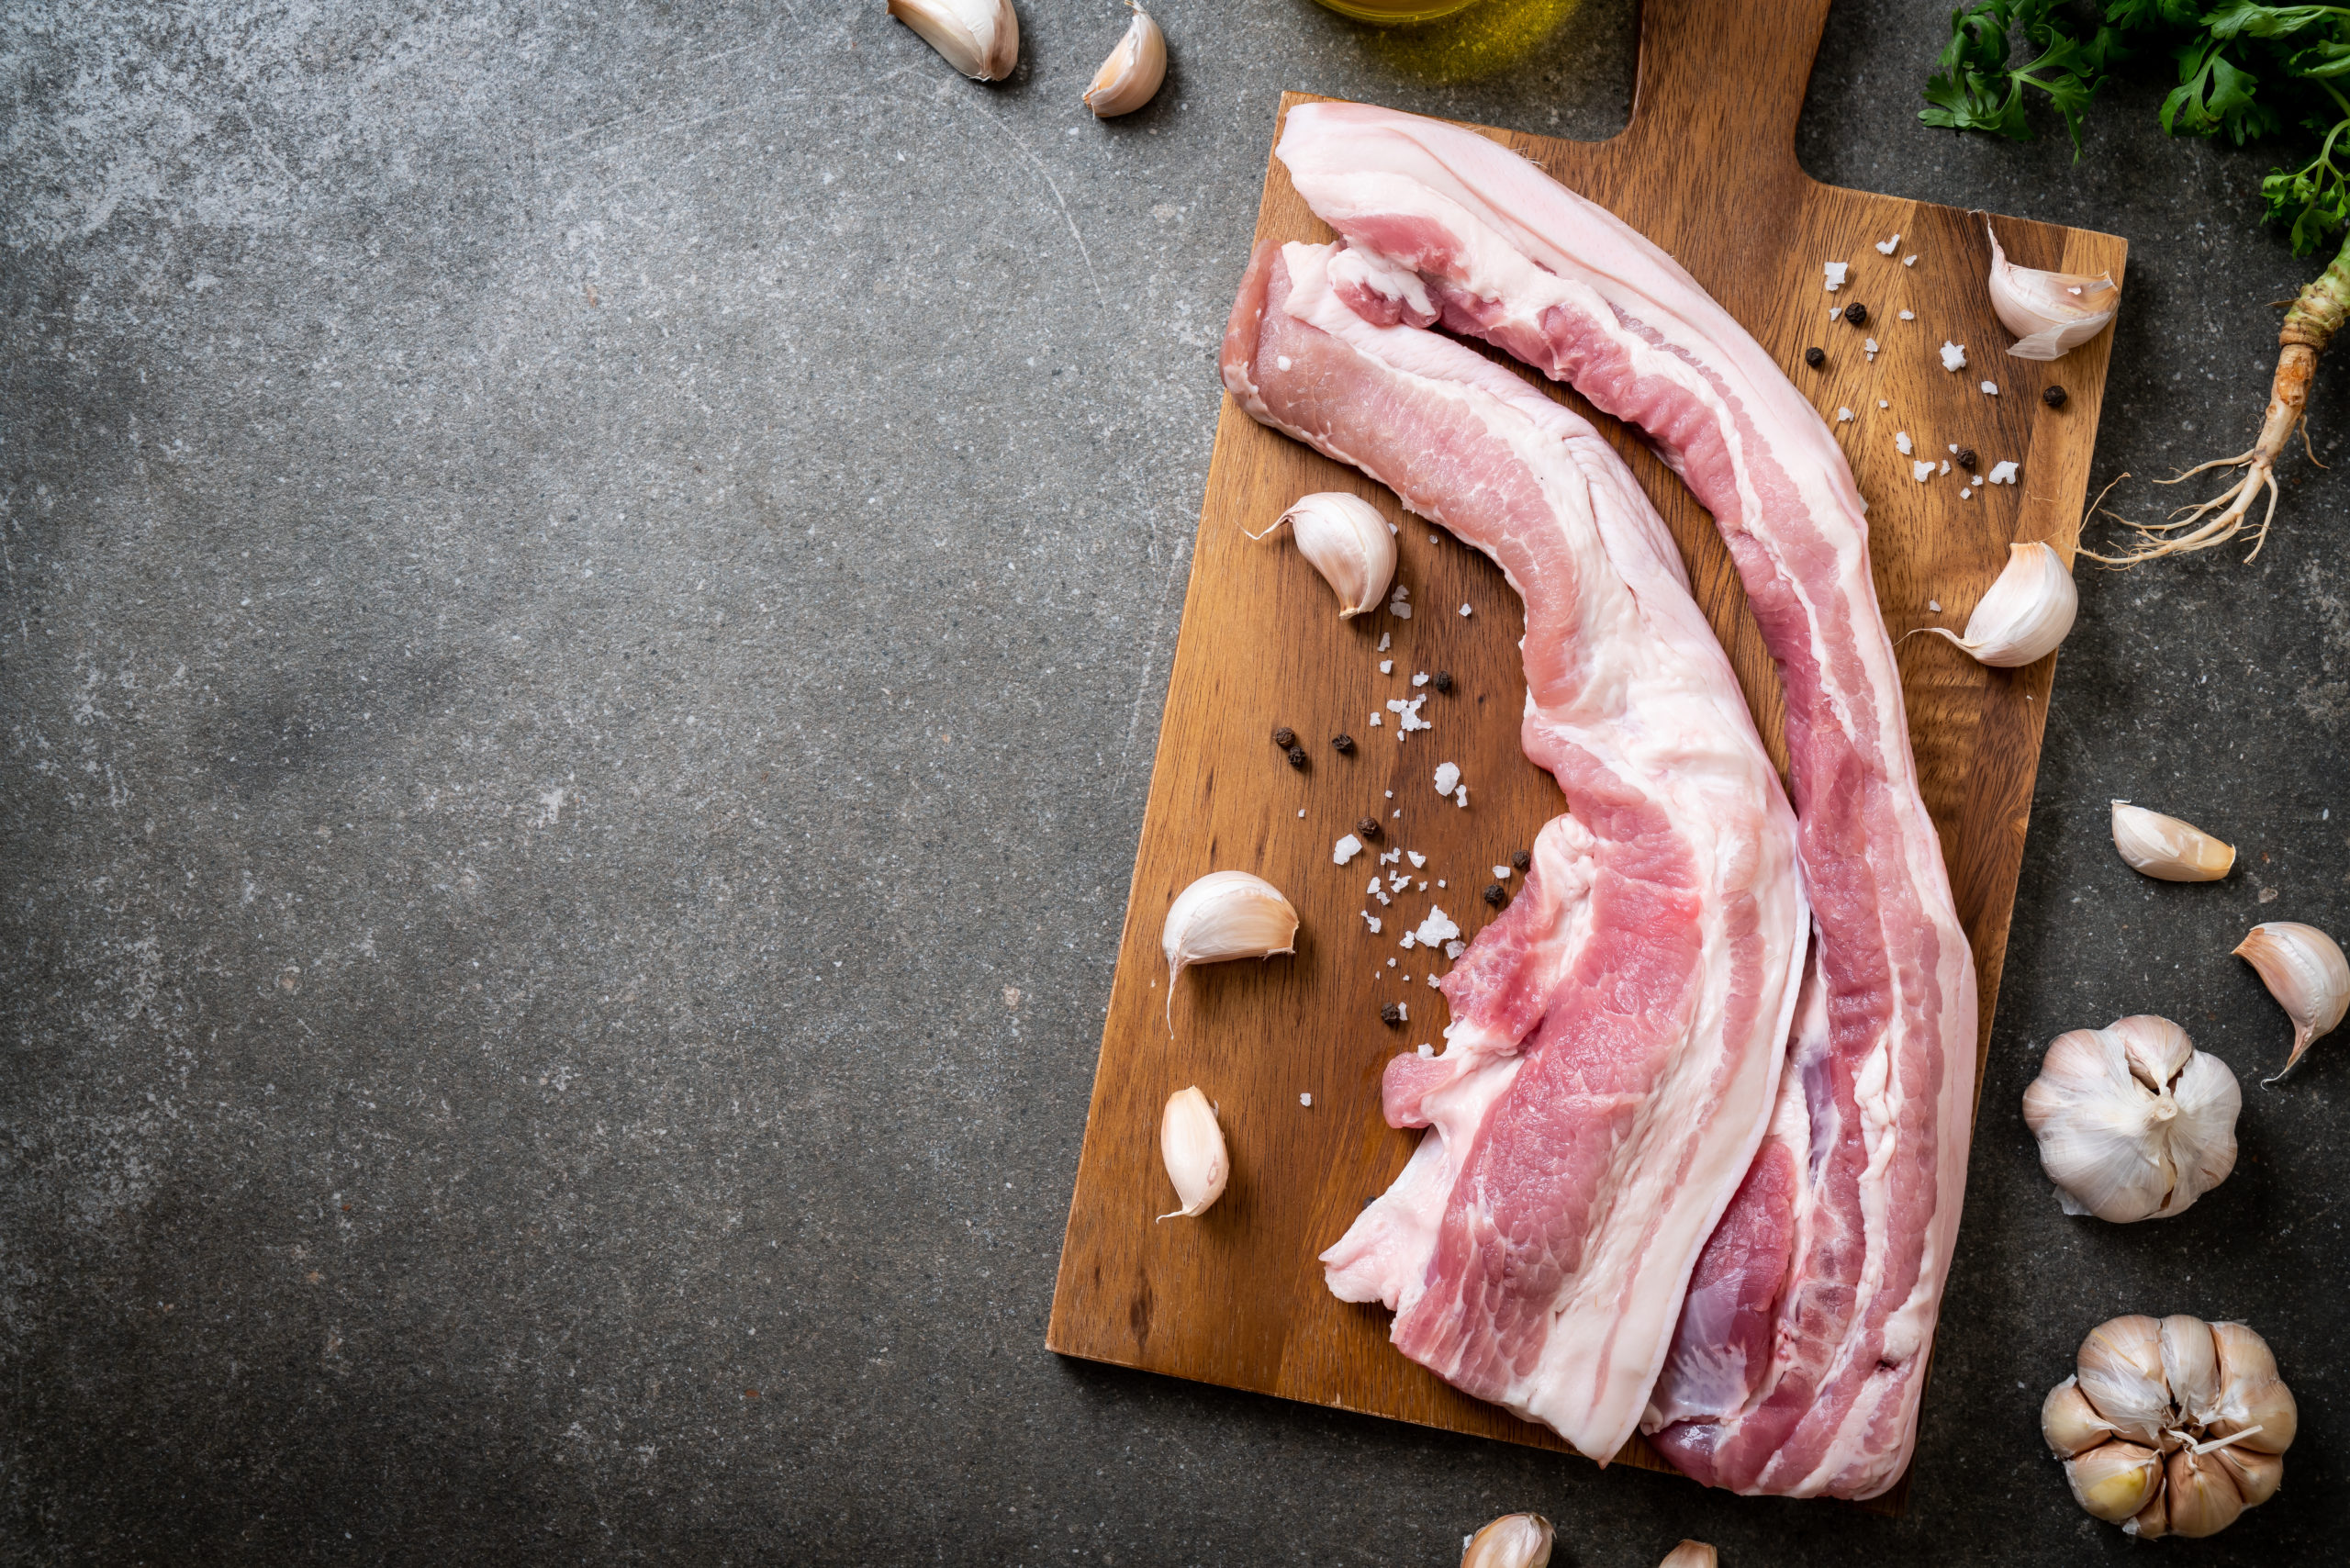 fresh raw streaky pork on wood board with ingredient